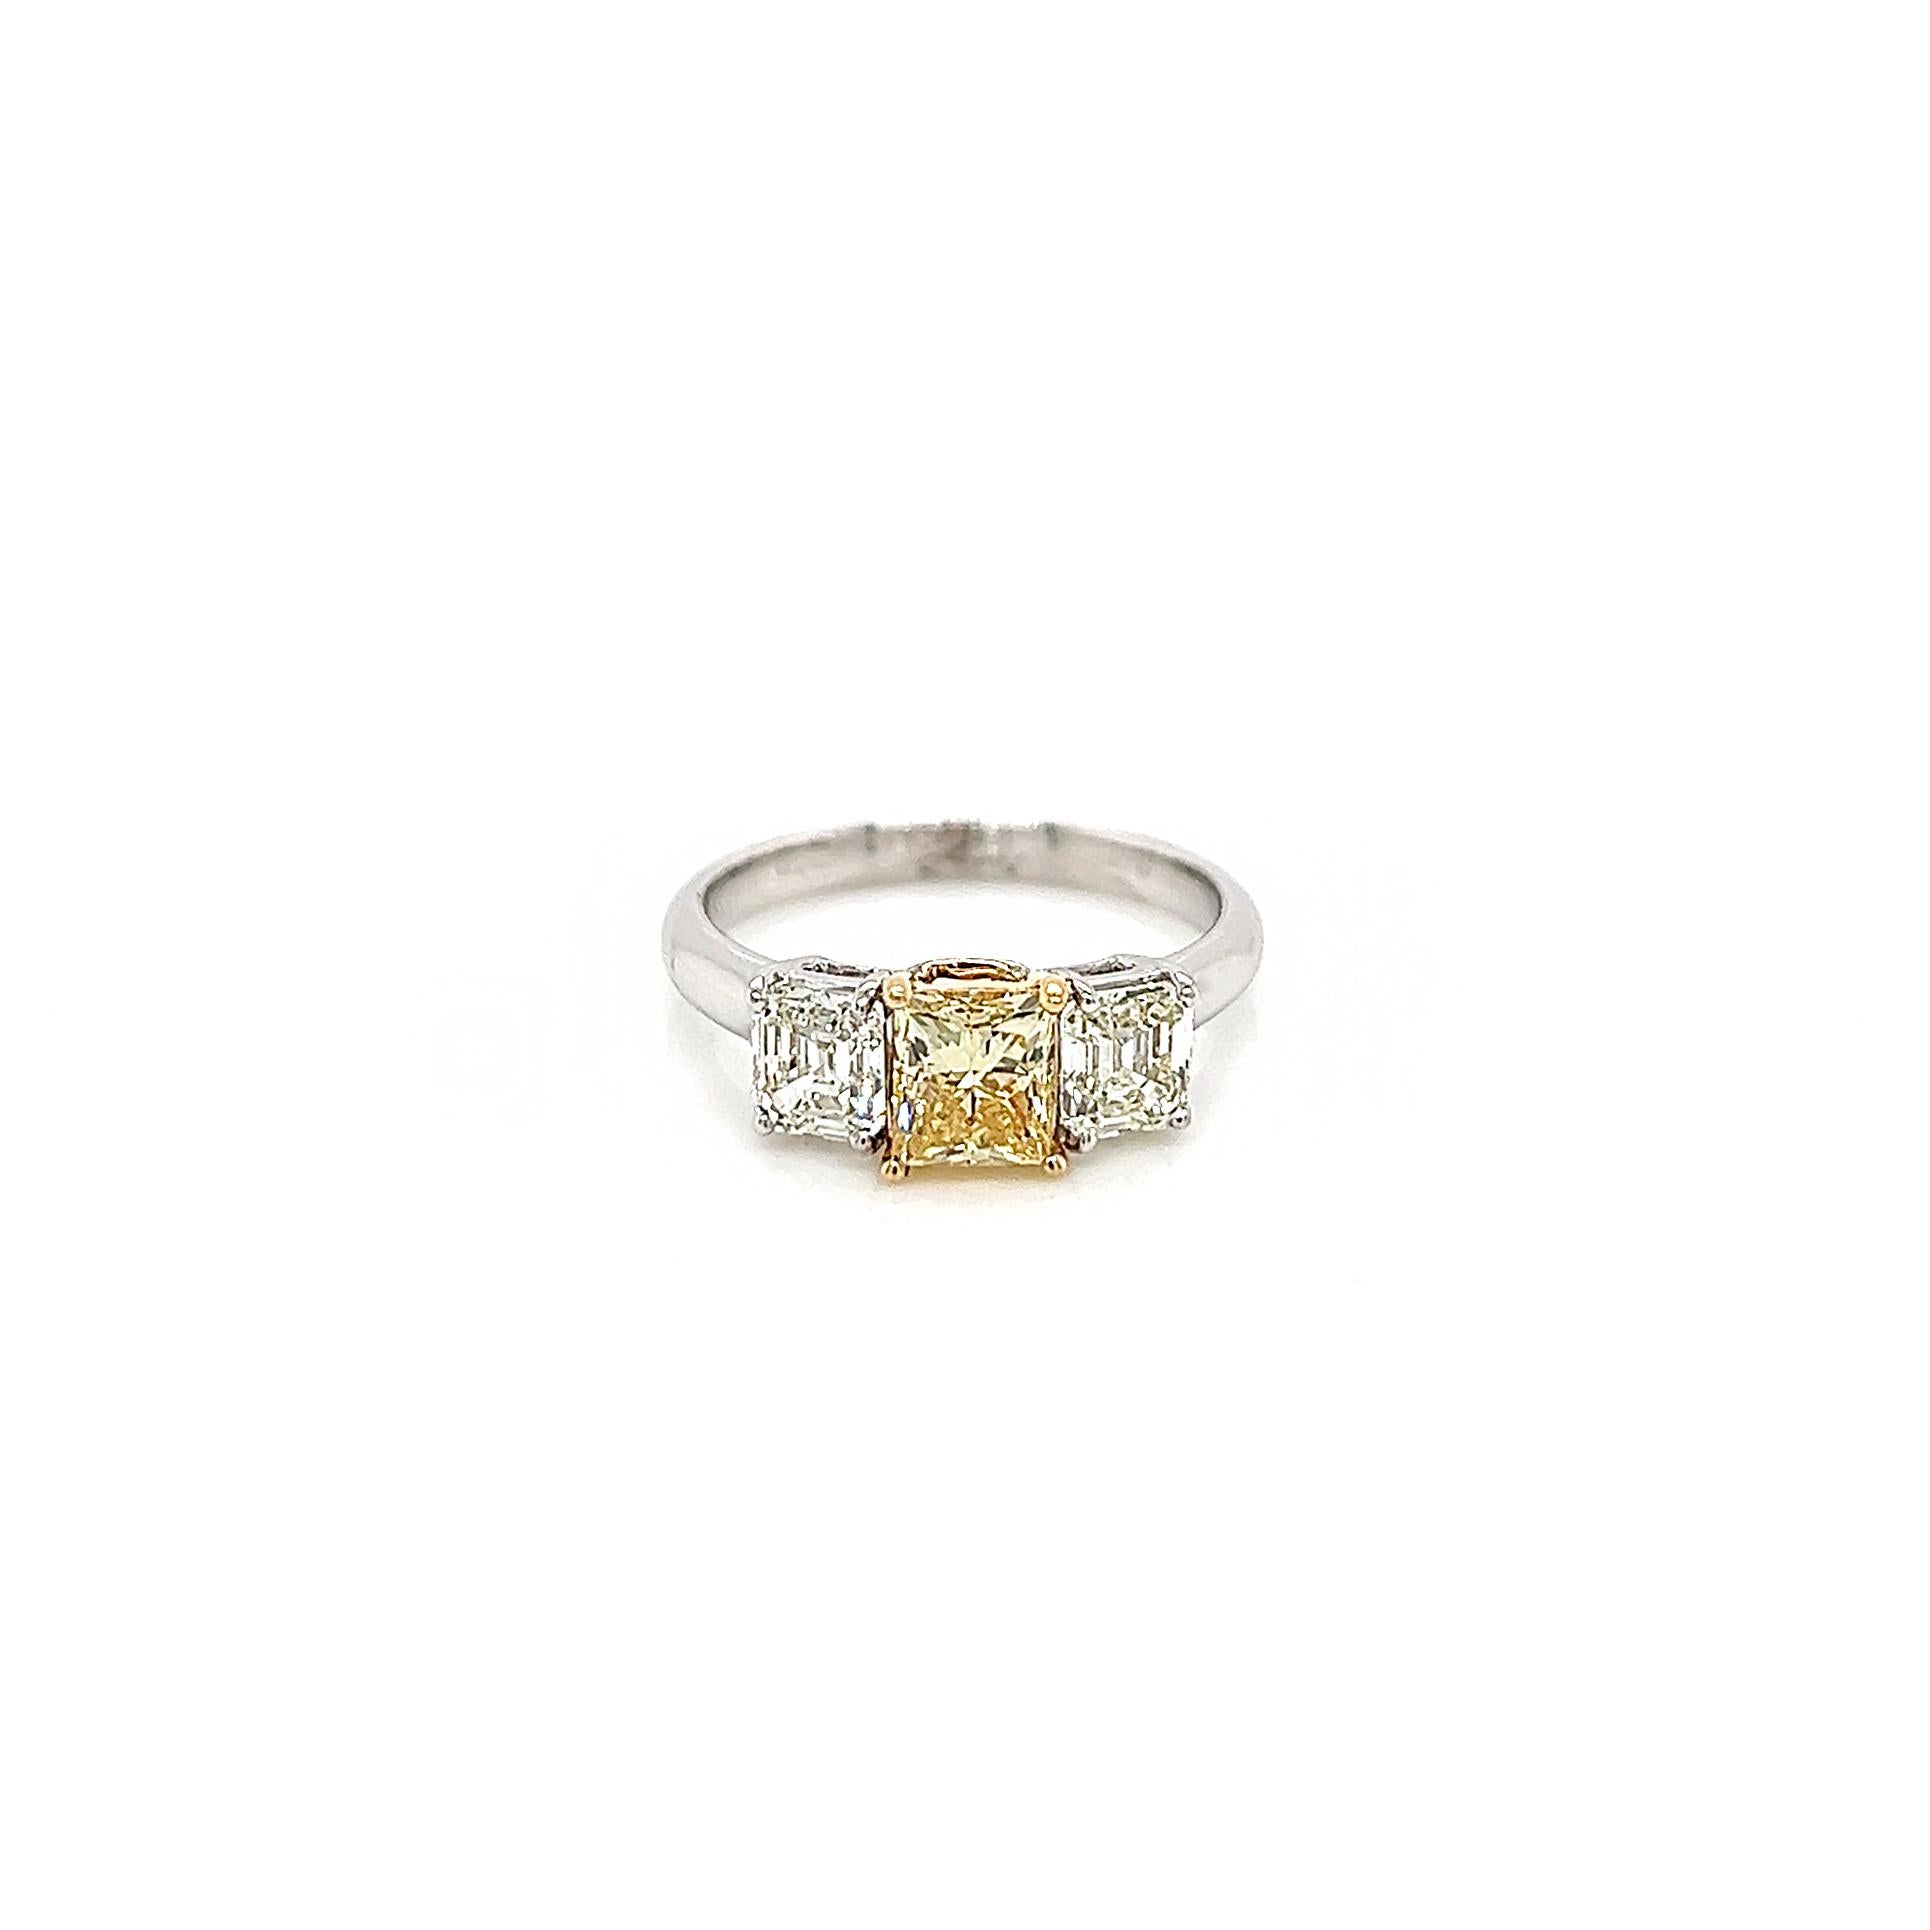 1.94 Total Carat Fancy Yellow Diamond Three Stone Ladies Engagement Ring. GIA Certified.

